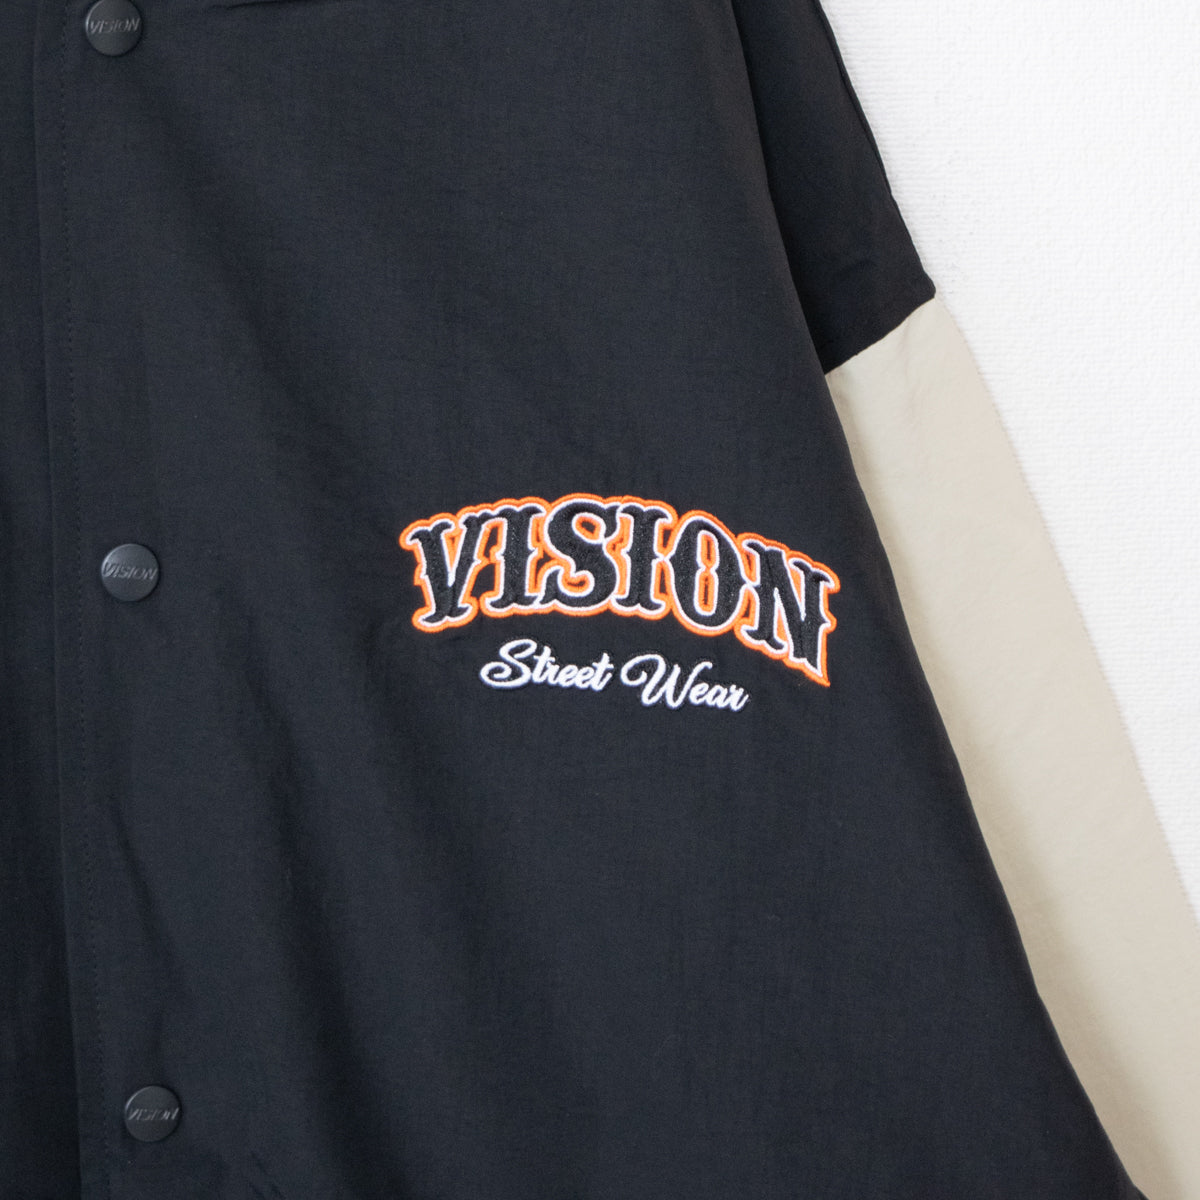 VISION STREET WEAR Nylon Embroidered Stadium Jacket BLACK